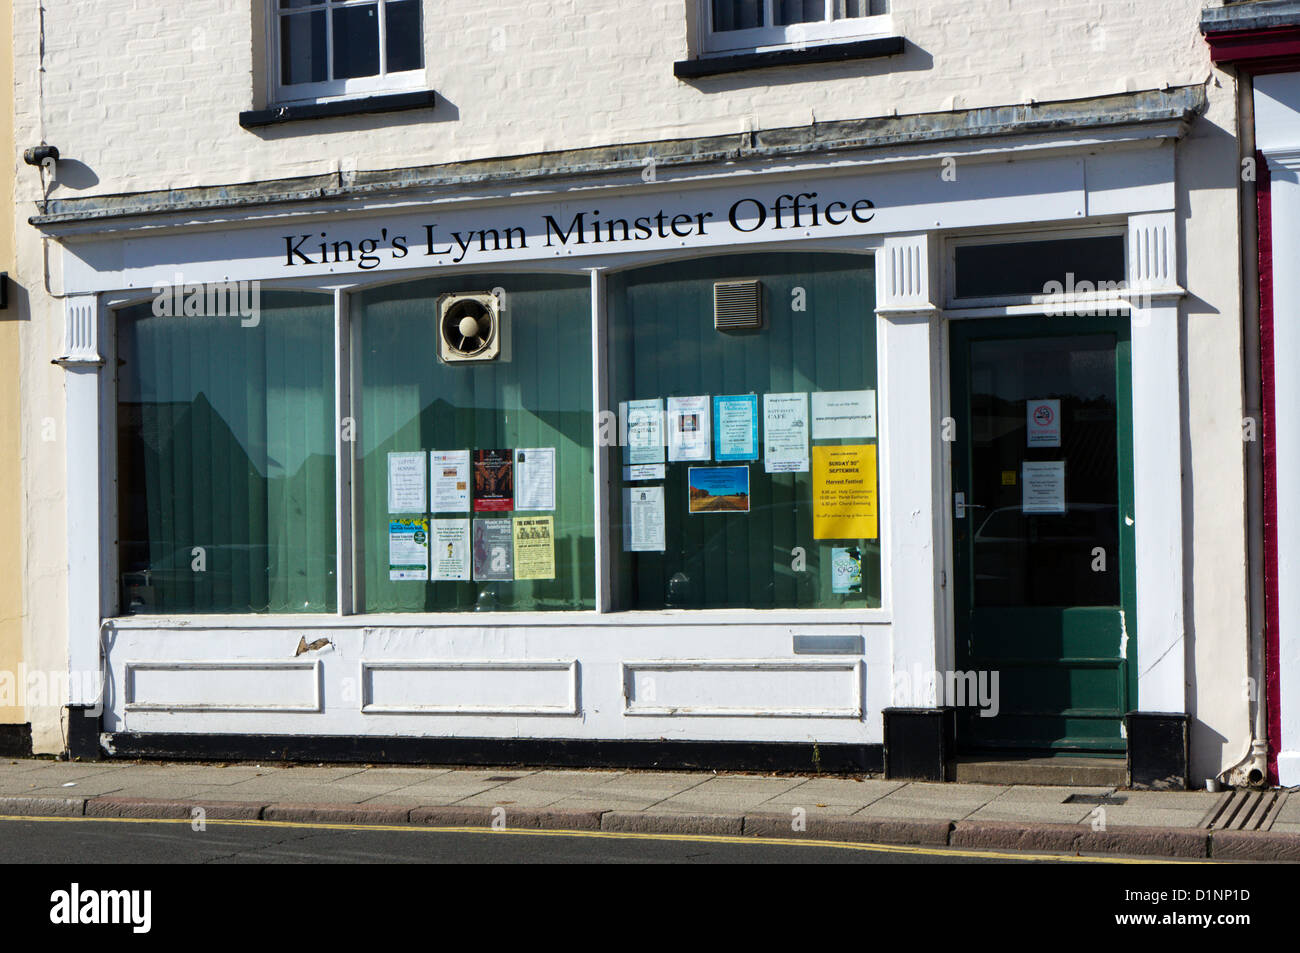 King's Lynn Minster Church Office in King's Lynn, Norfolk, England. Stock Photo